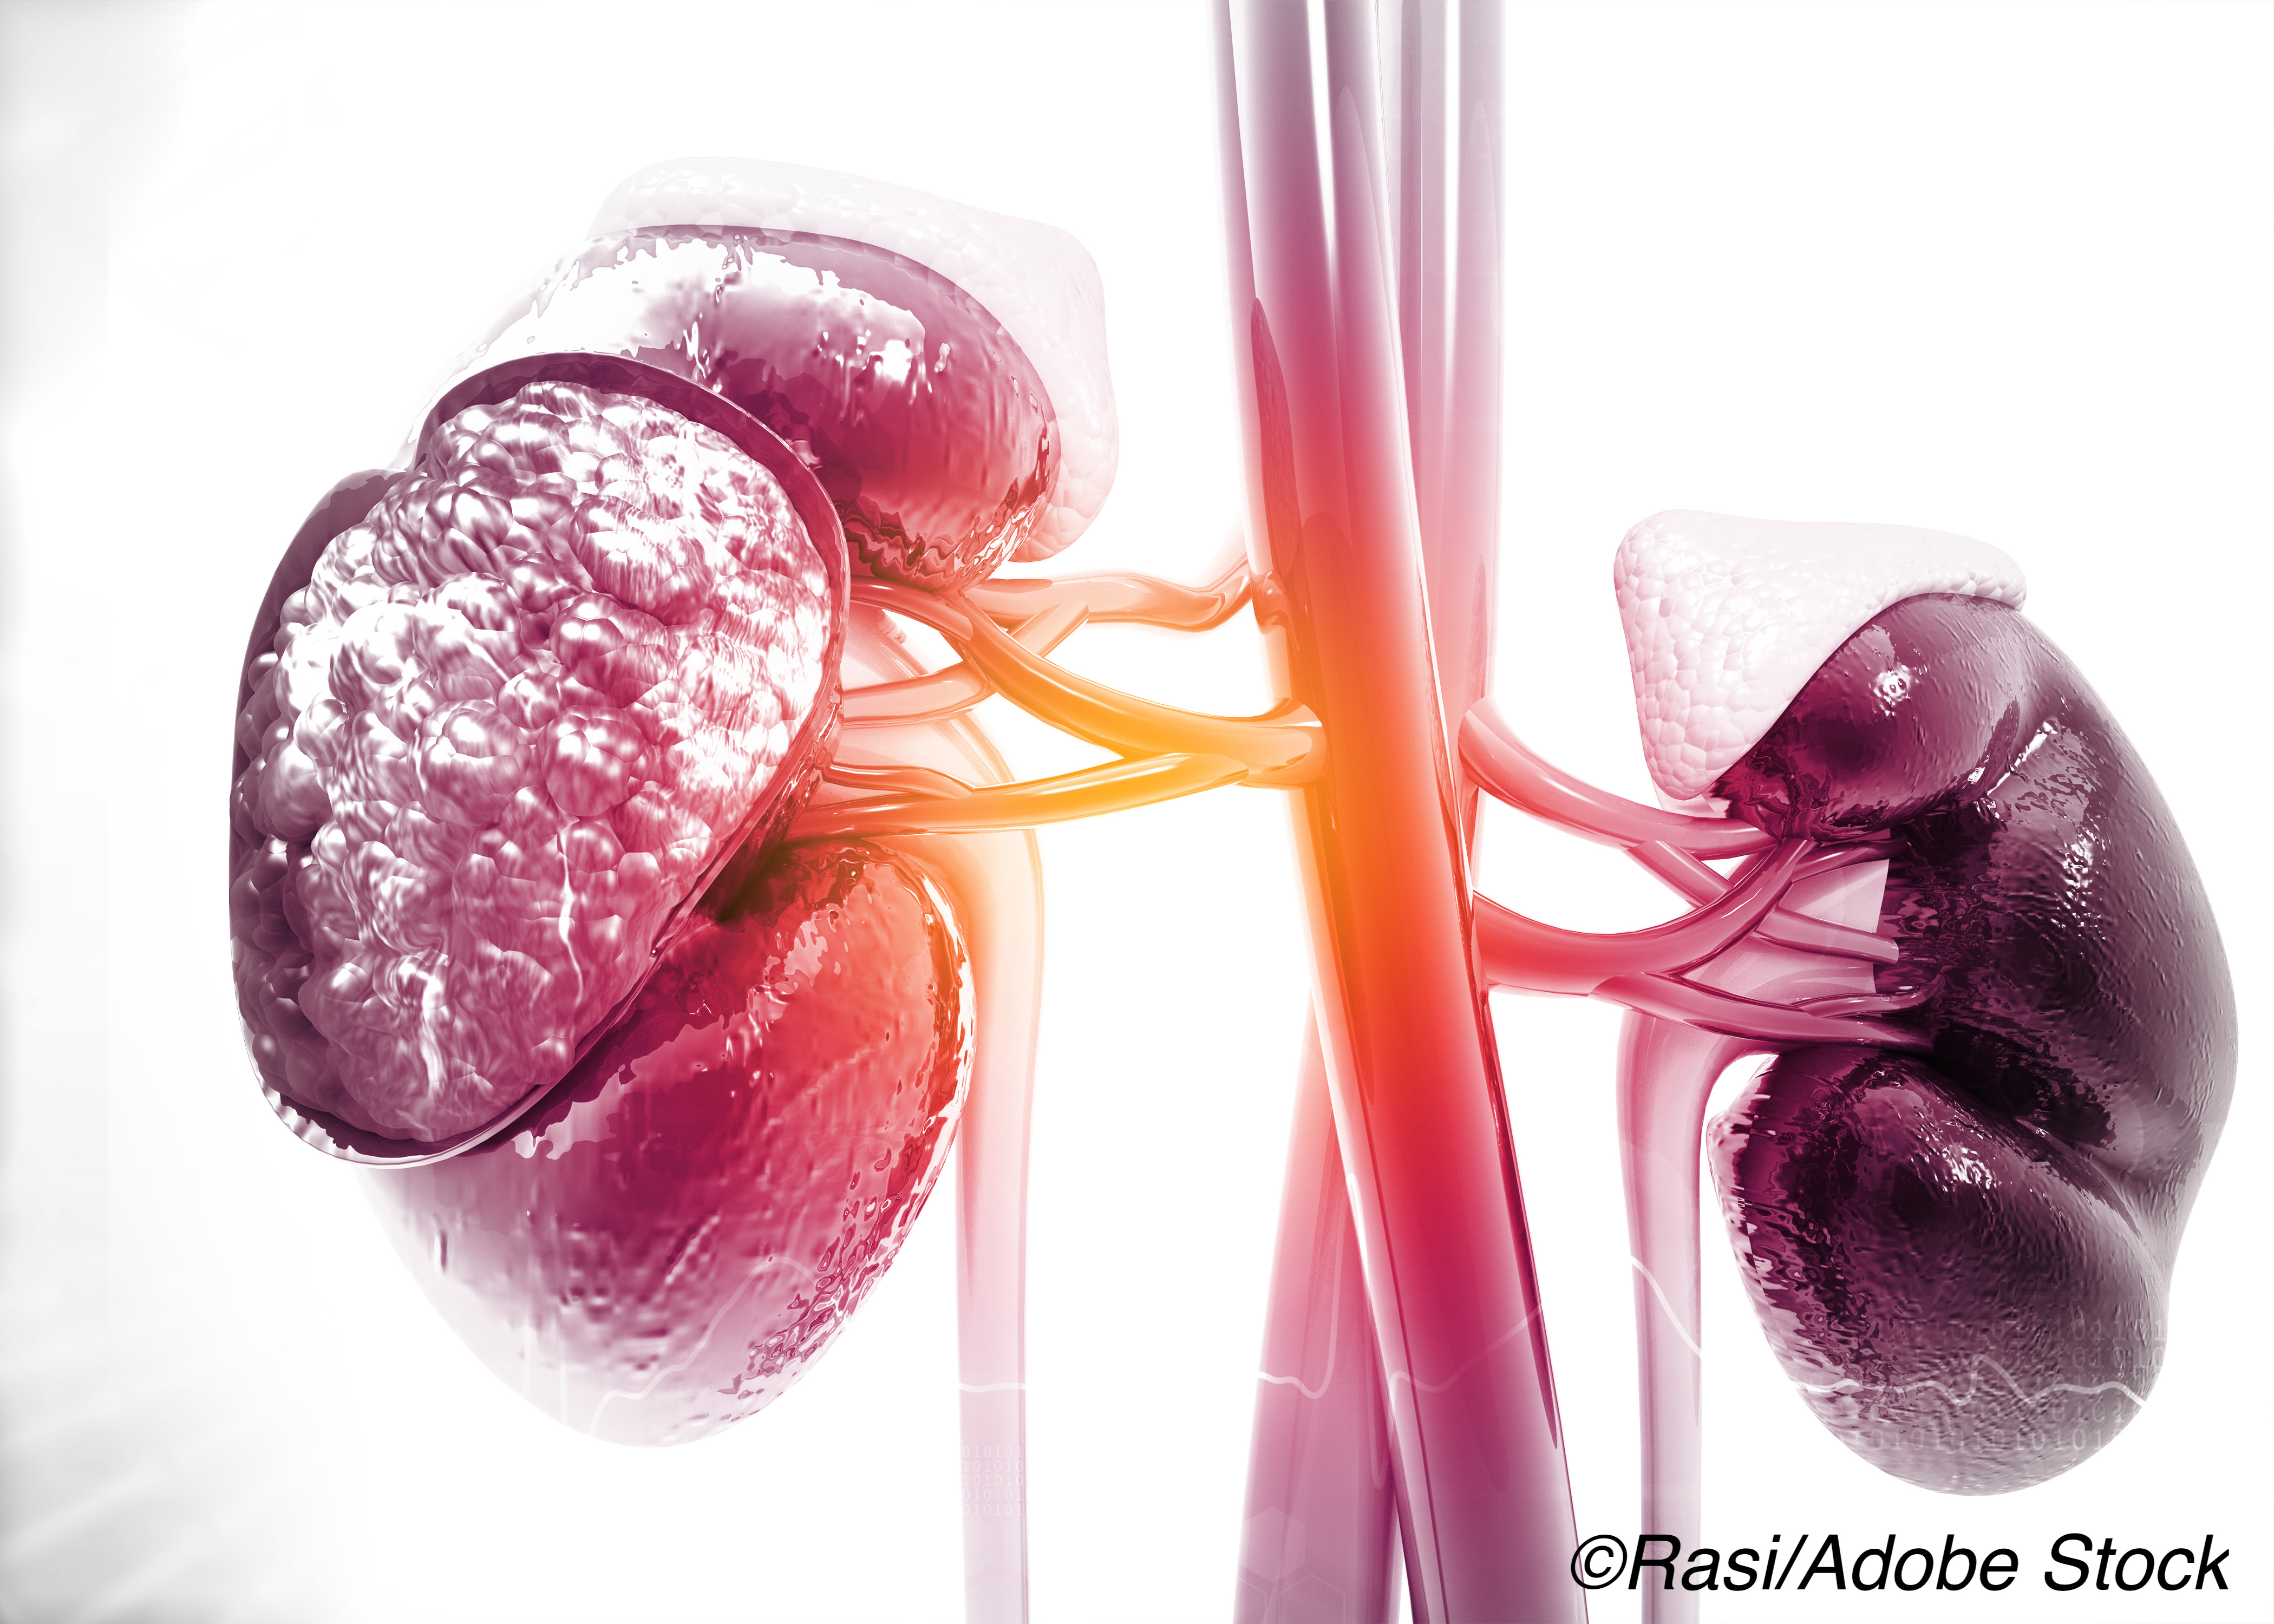 Despite Lowering Serum Urate Levels, Allopurinol Does Not Slow Kidney Decline in Type 1 Diabetes